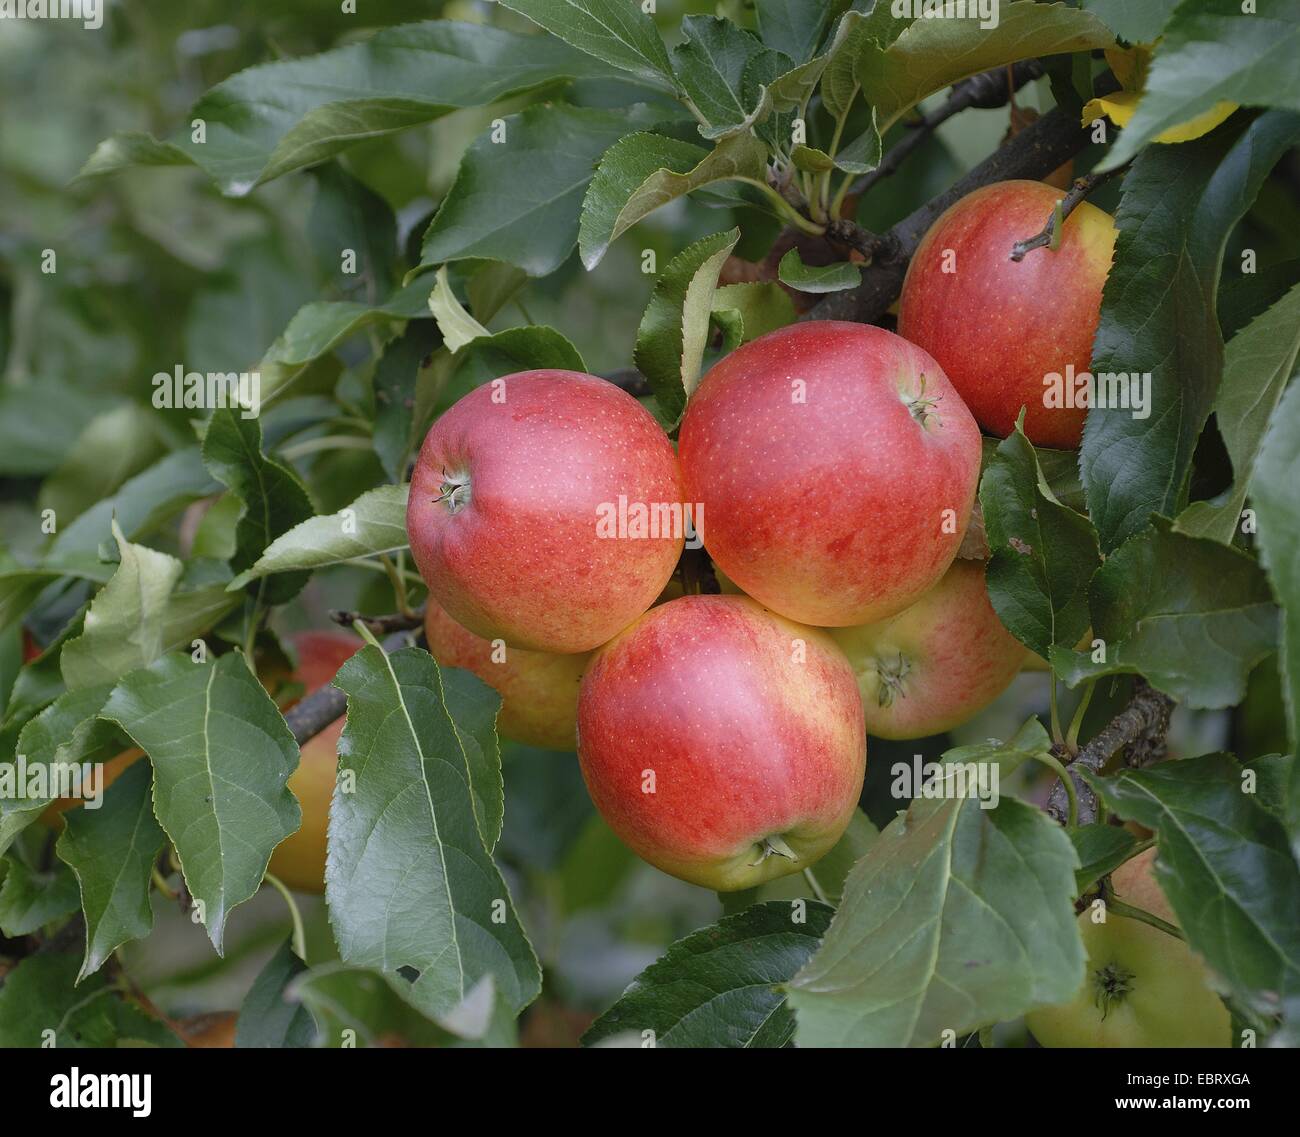 Apfelbaum (Malus Domestica "Gala", Malus Domestica Gala), Sorte Gala, Äpfel auf dem Baum Stockfoto